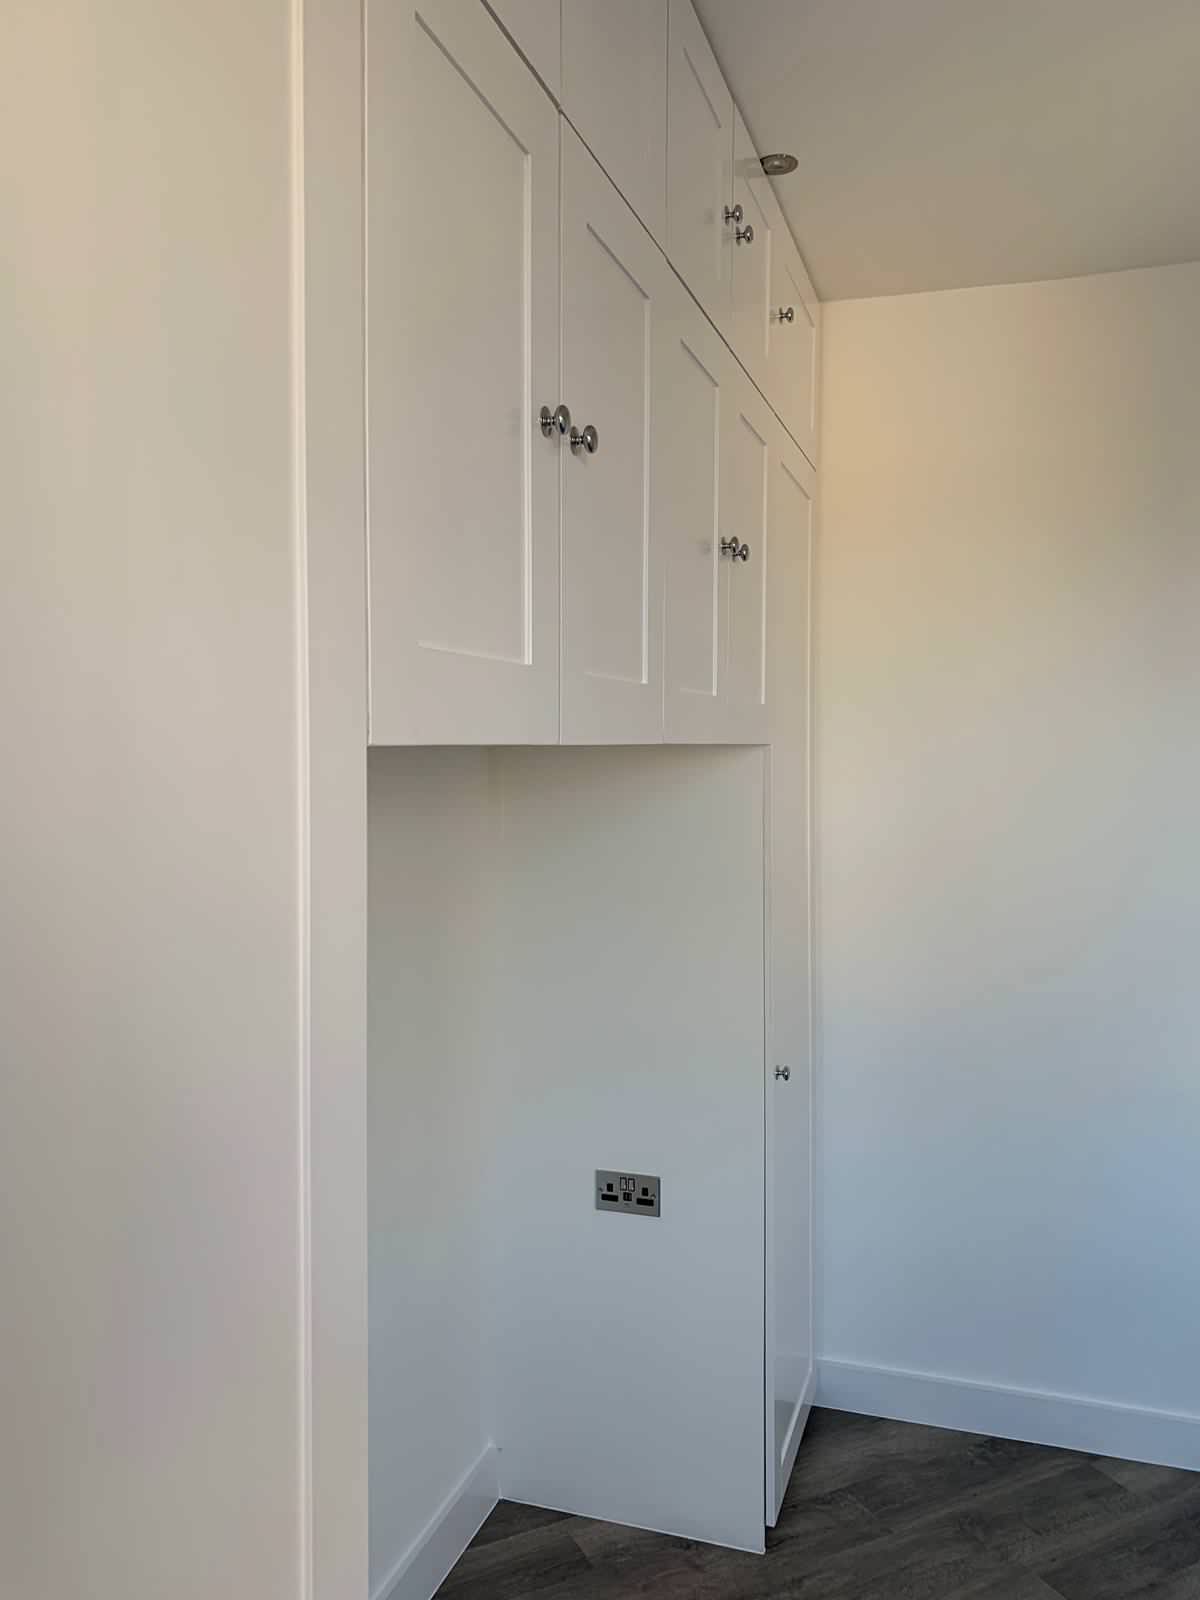 Built in cupboard space